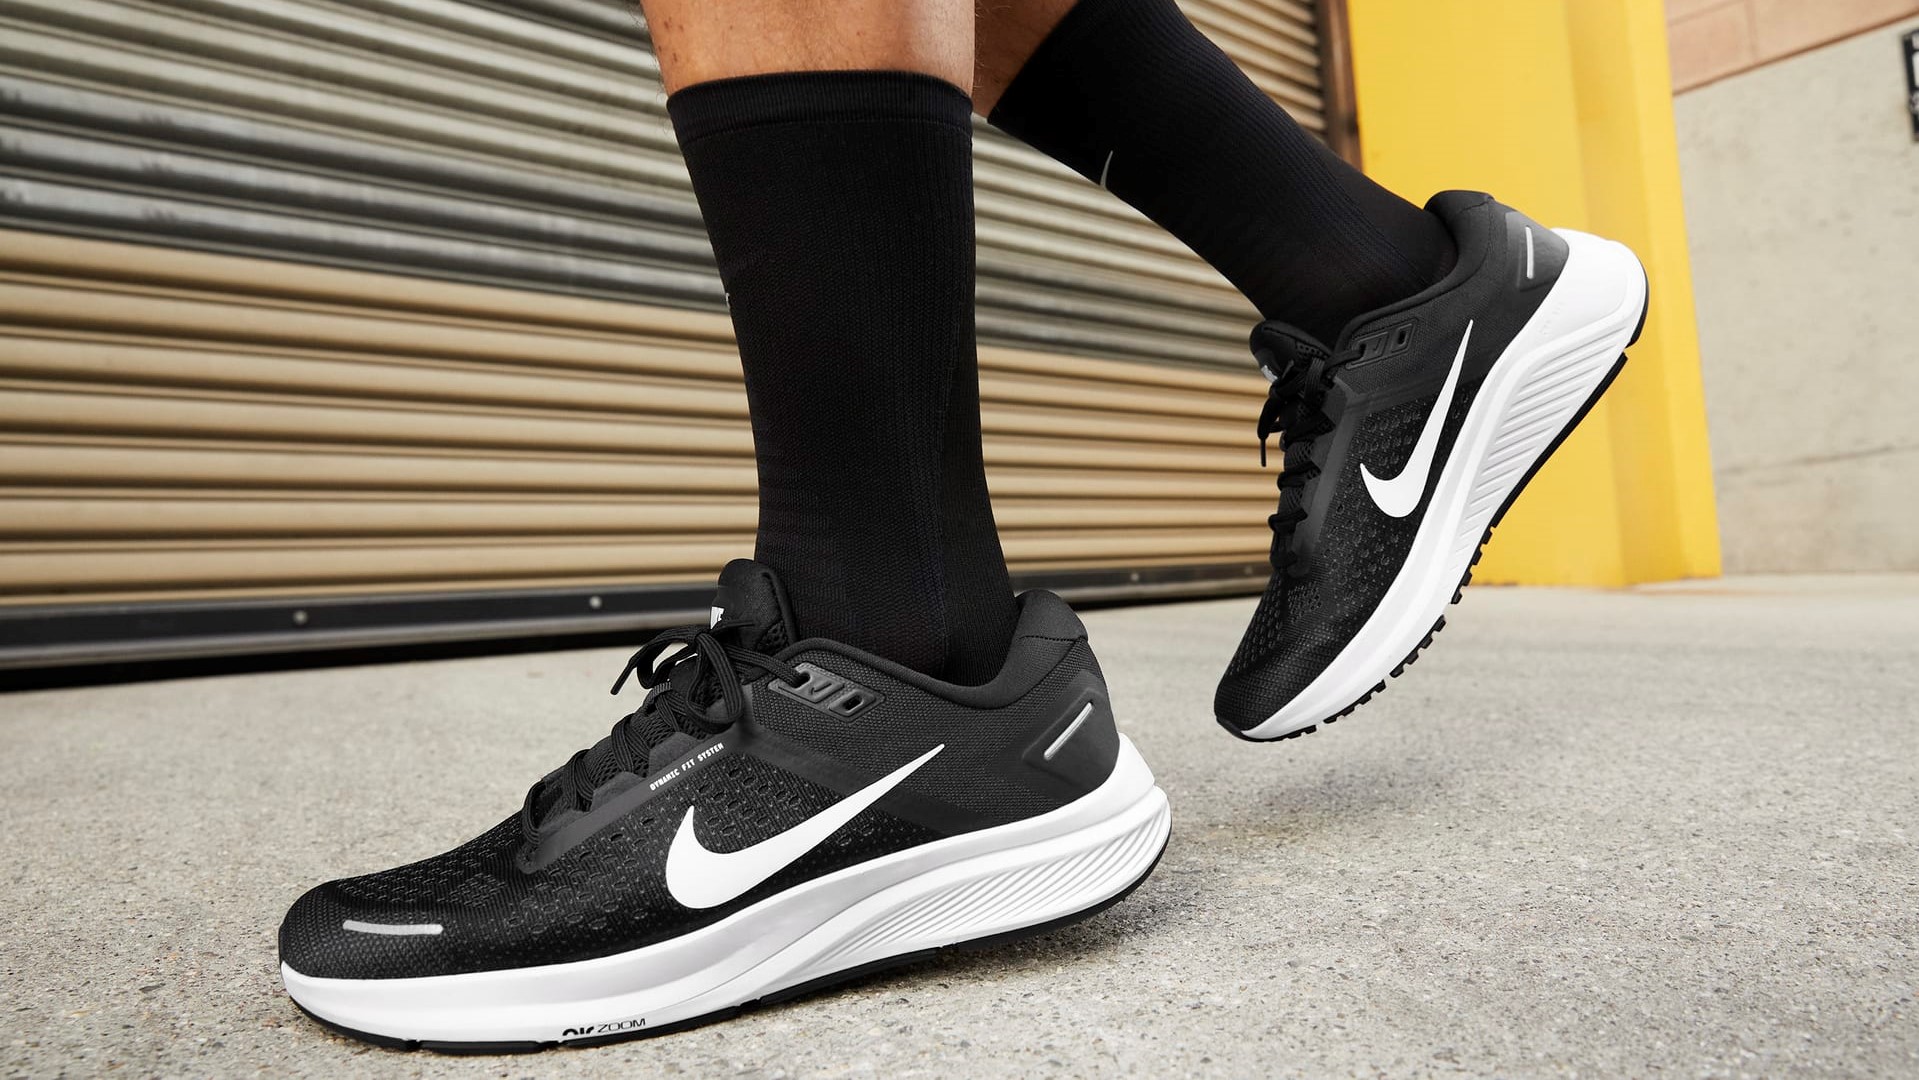 Save 50% off running in Nike's end-of-season sale | TechRadar